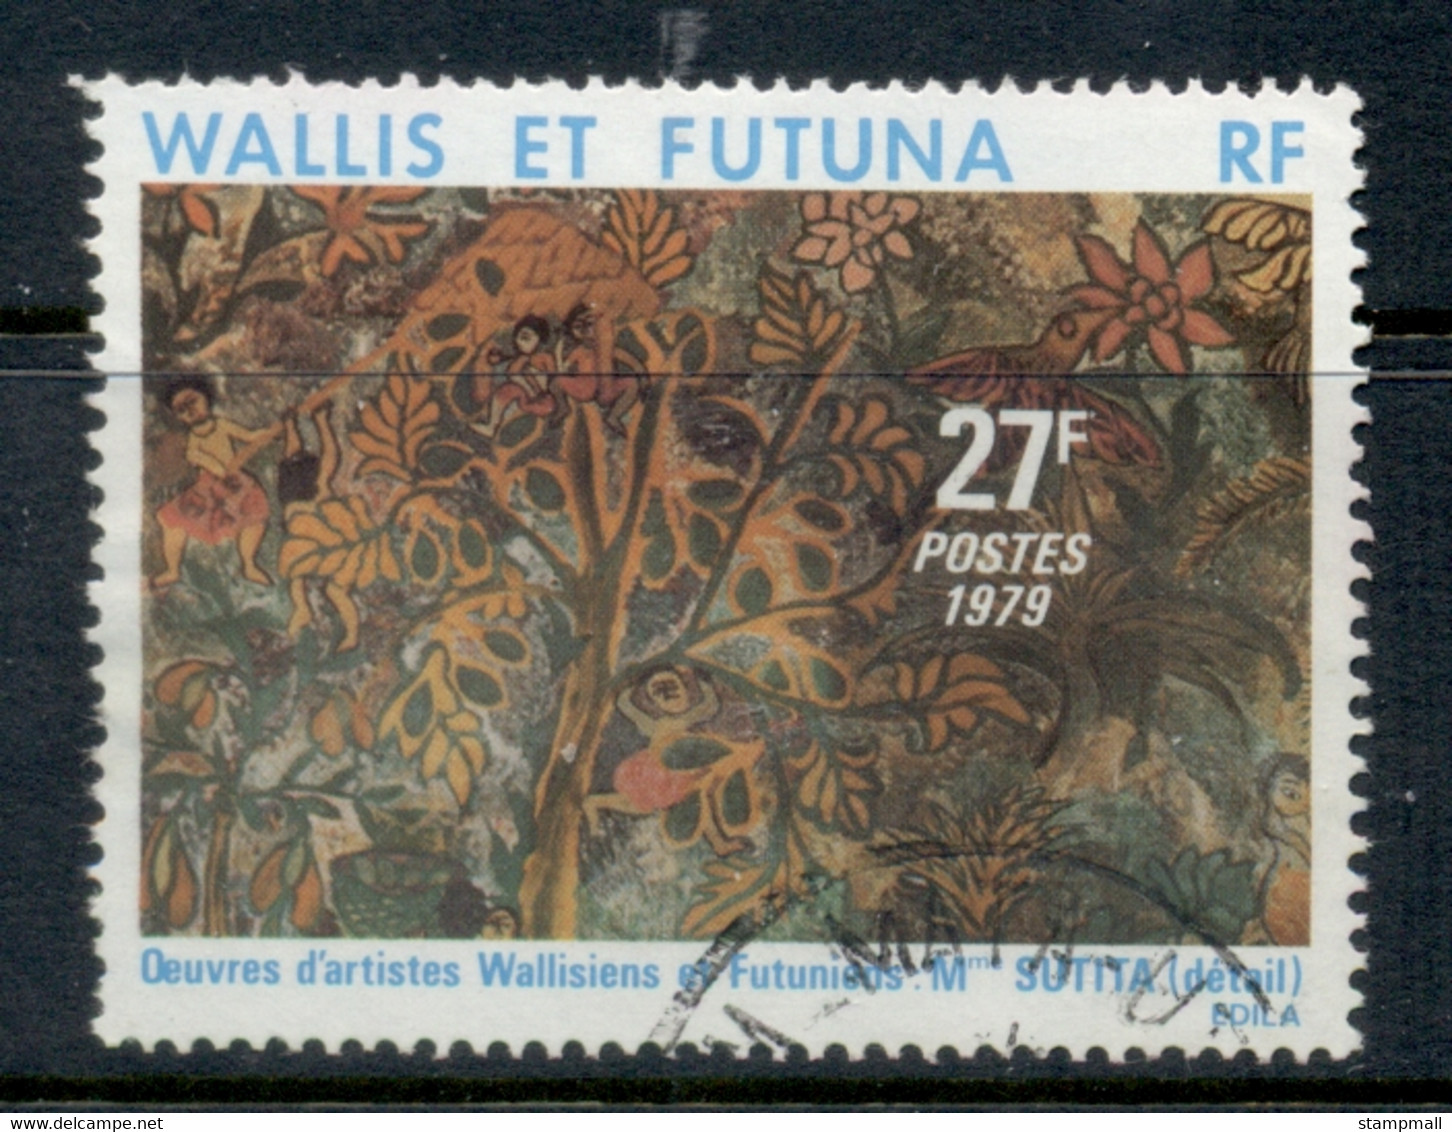 Wallis & Futuna 1979 Local Paintings 27f FU - Used Stamps